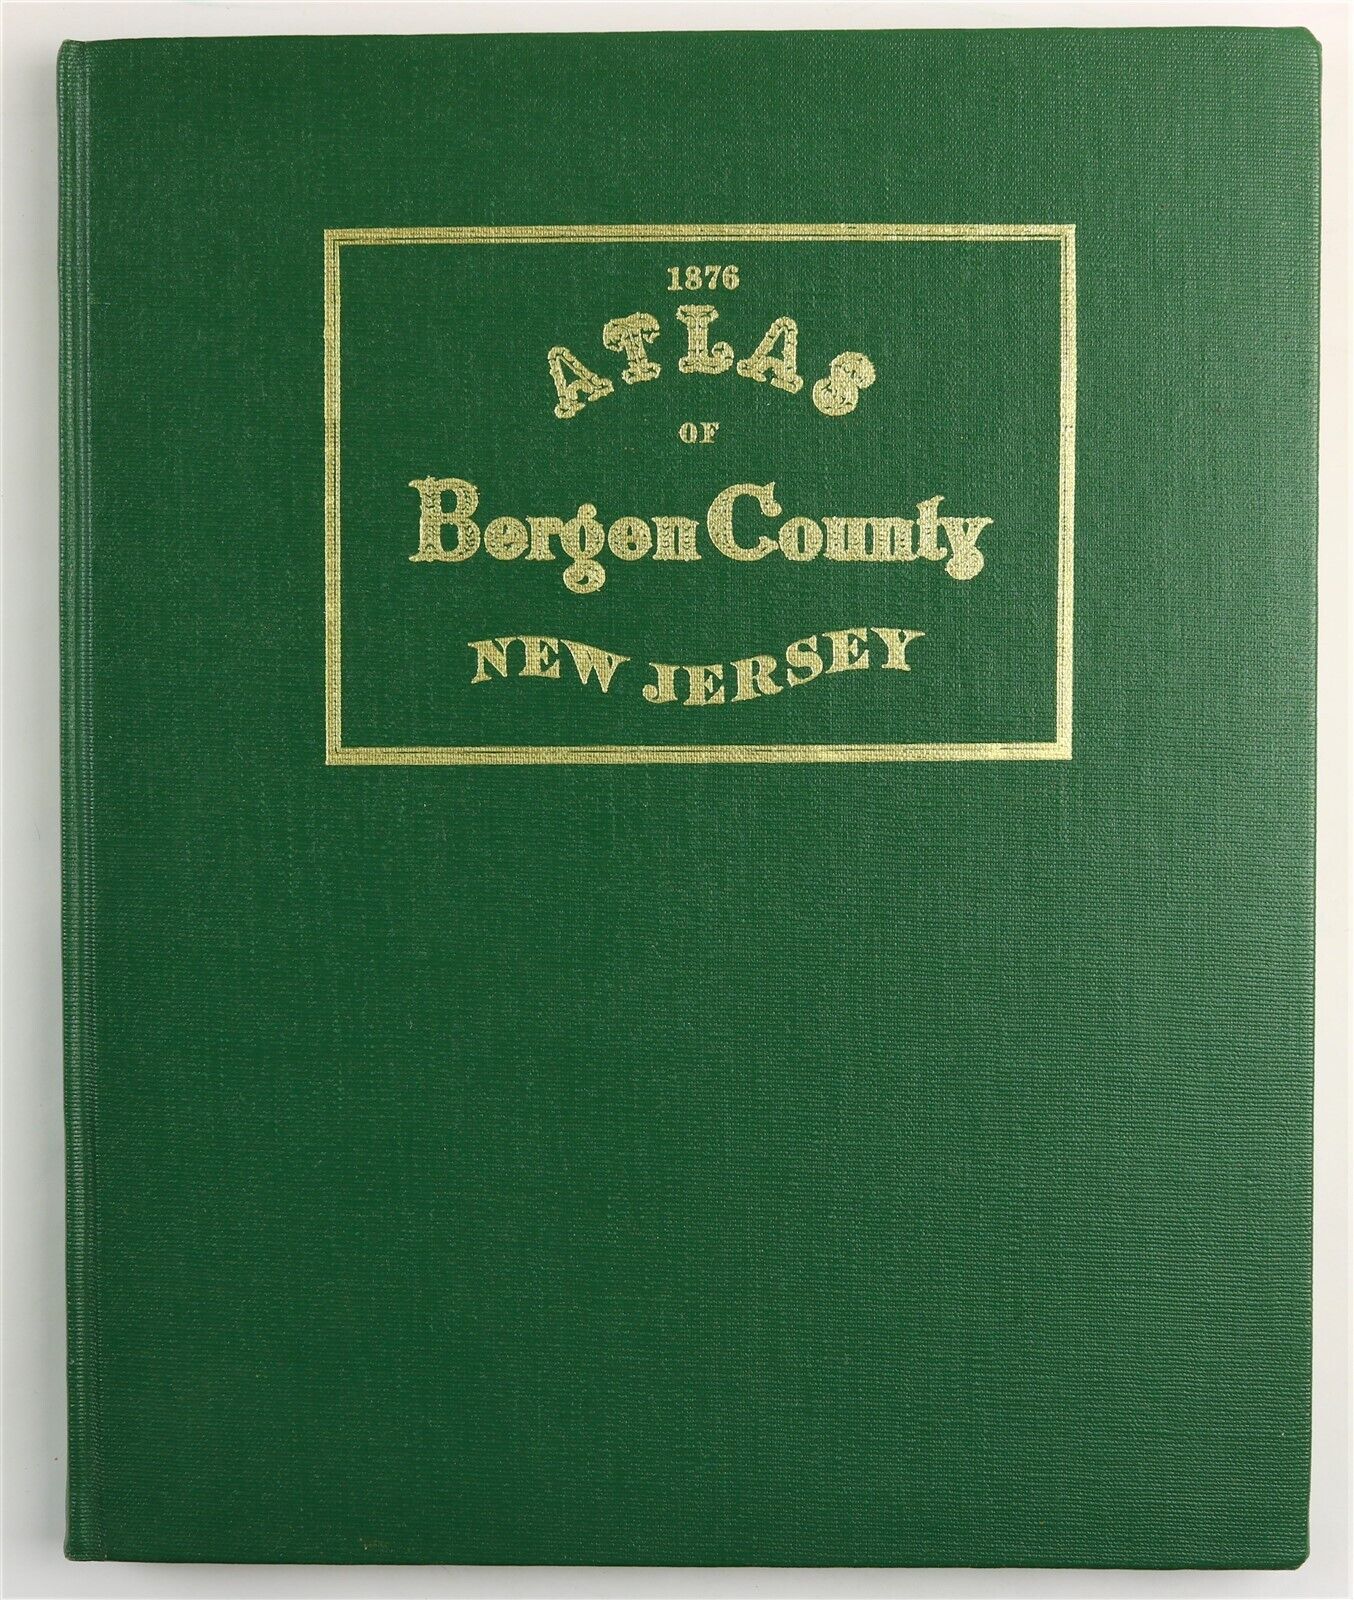 Bergen County, New Jersey Hackensack Mahwah Teaneck Lodi NJ 1876 Atlas Reprint